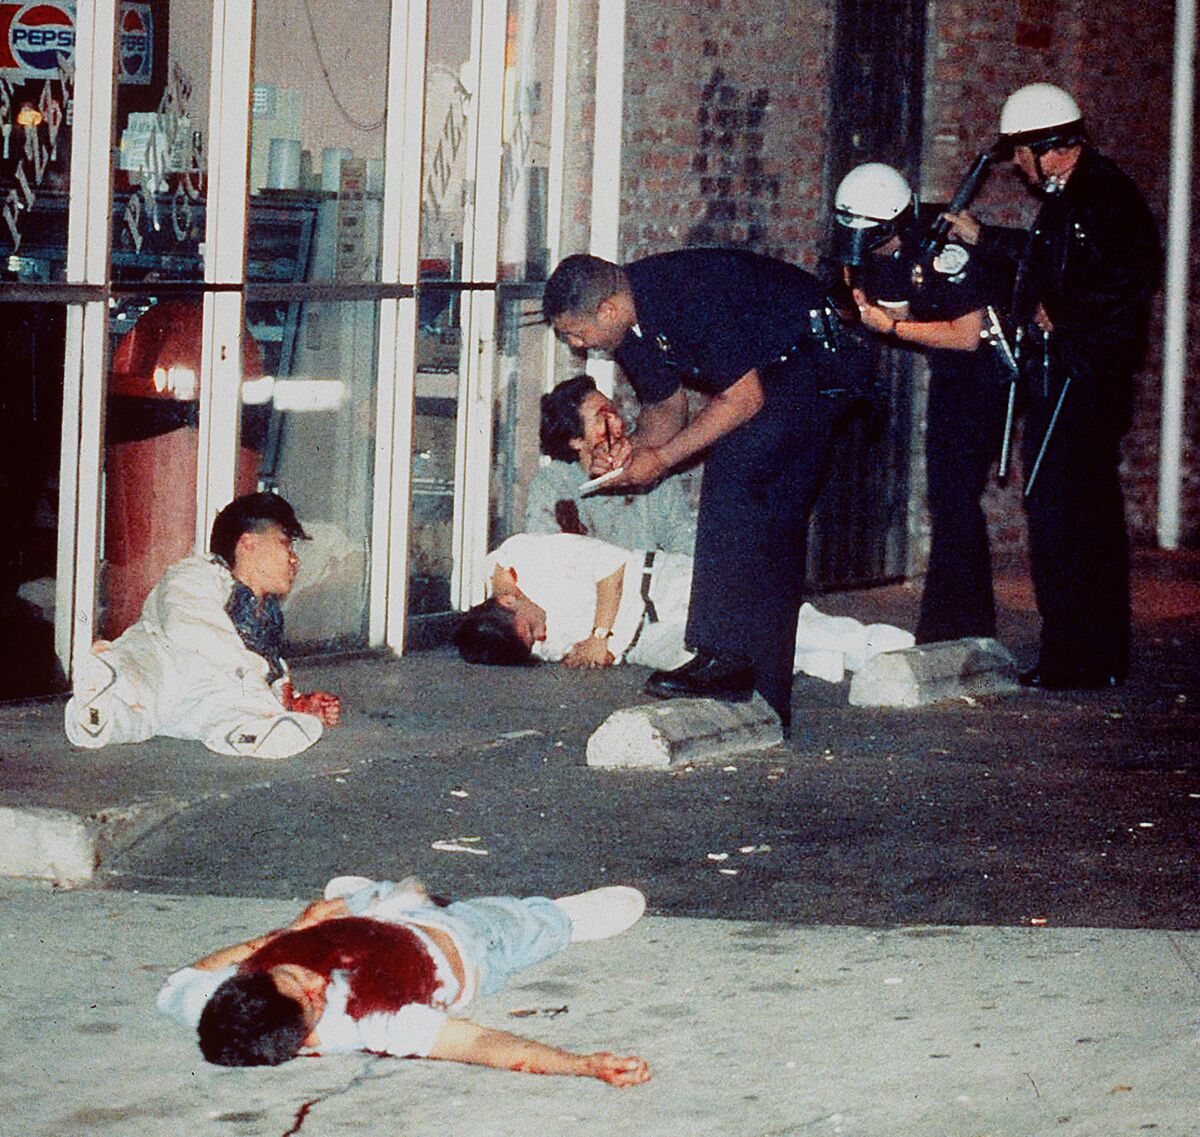 Four bloody men lie on the ground as three policemen talk to them.